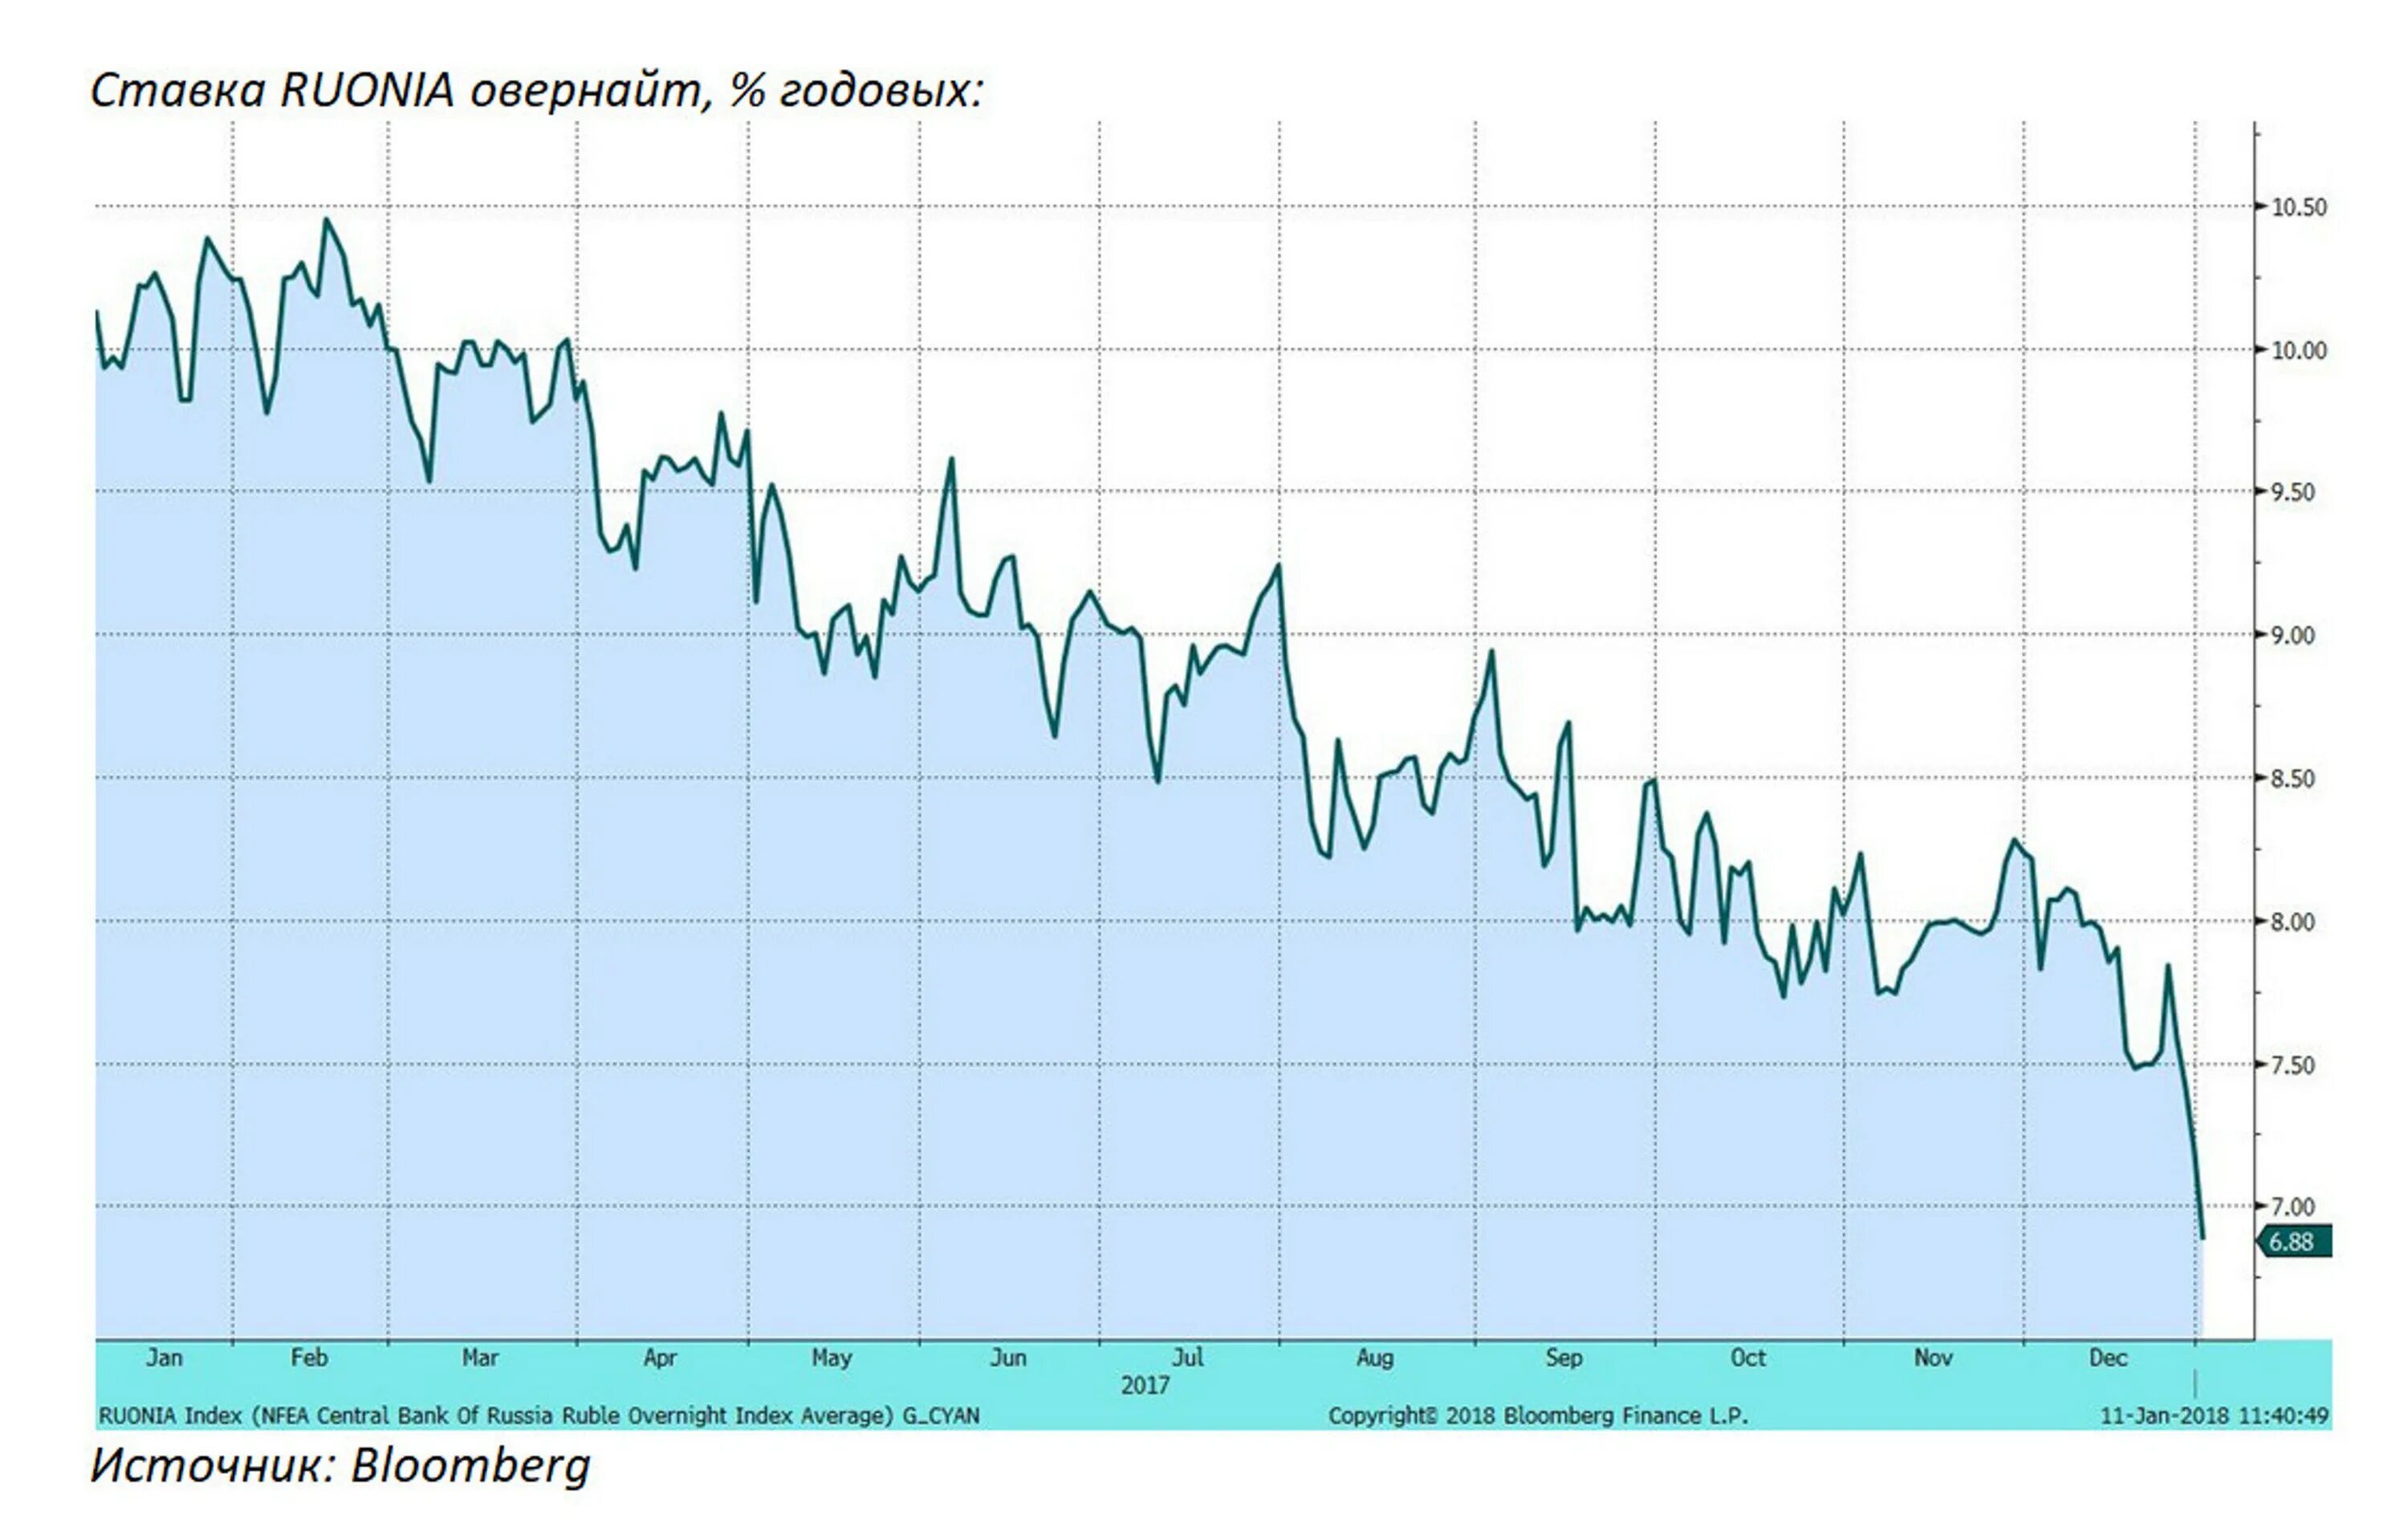 Руония сегодня цб рф. Ставка RUONIA. Ставка RUONIA (ruble overnight Index average) - это:. Ставка RUONIA по месяцам. Динамика ставки RUONIA.